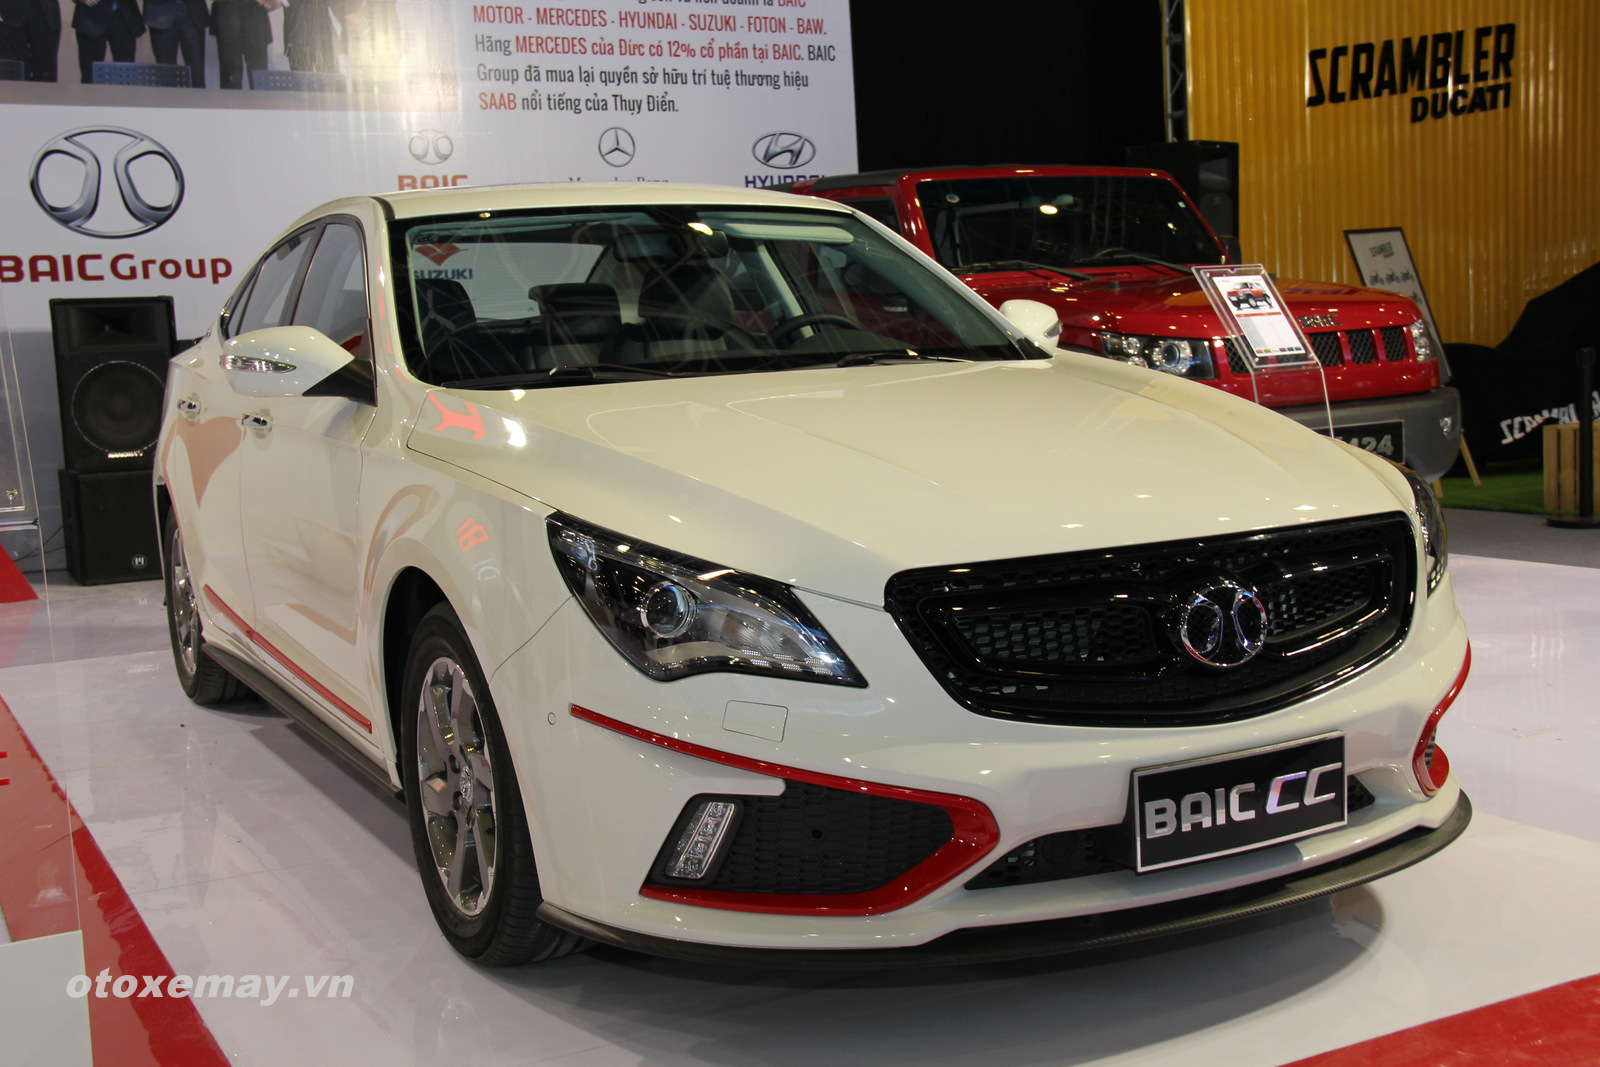 VIMS 2015: Cận cảnh sedan BAIC CC của Trung Quốc 1